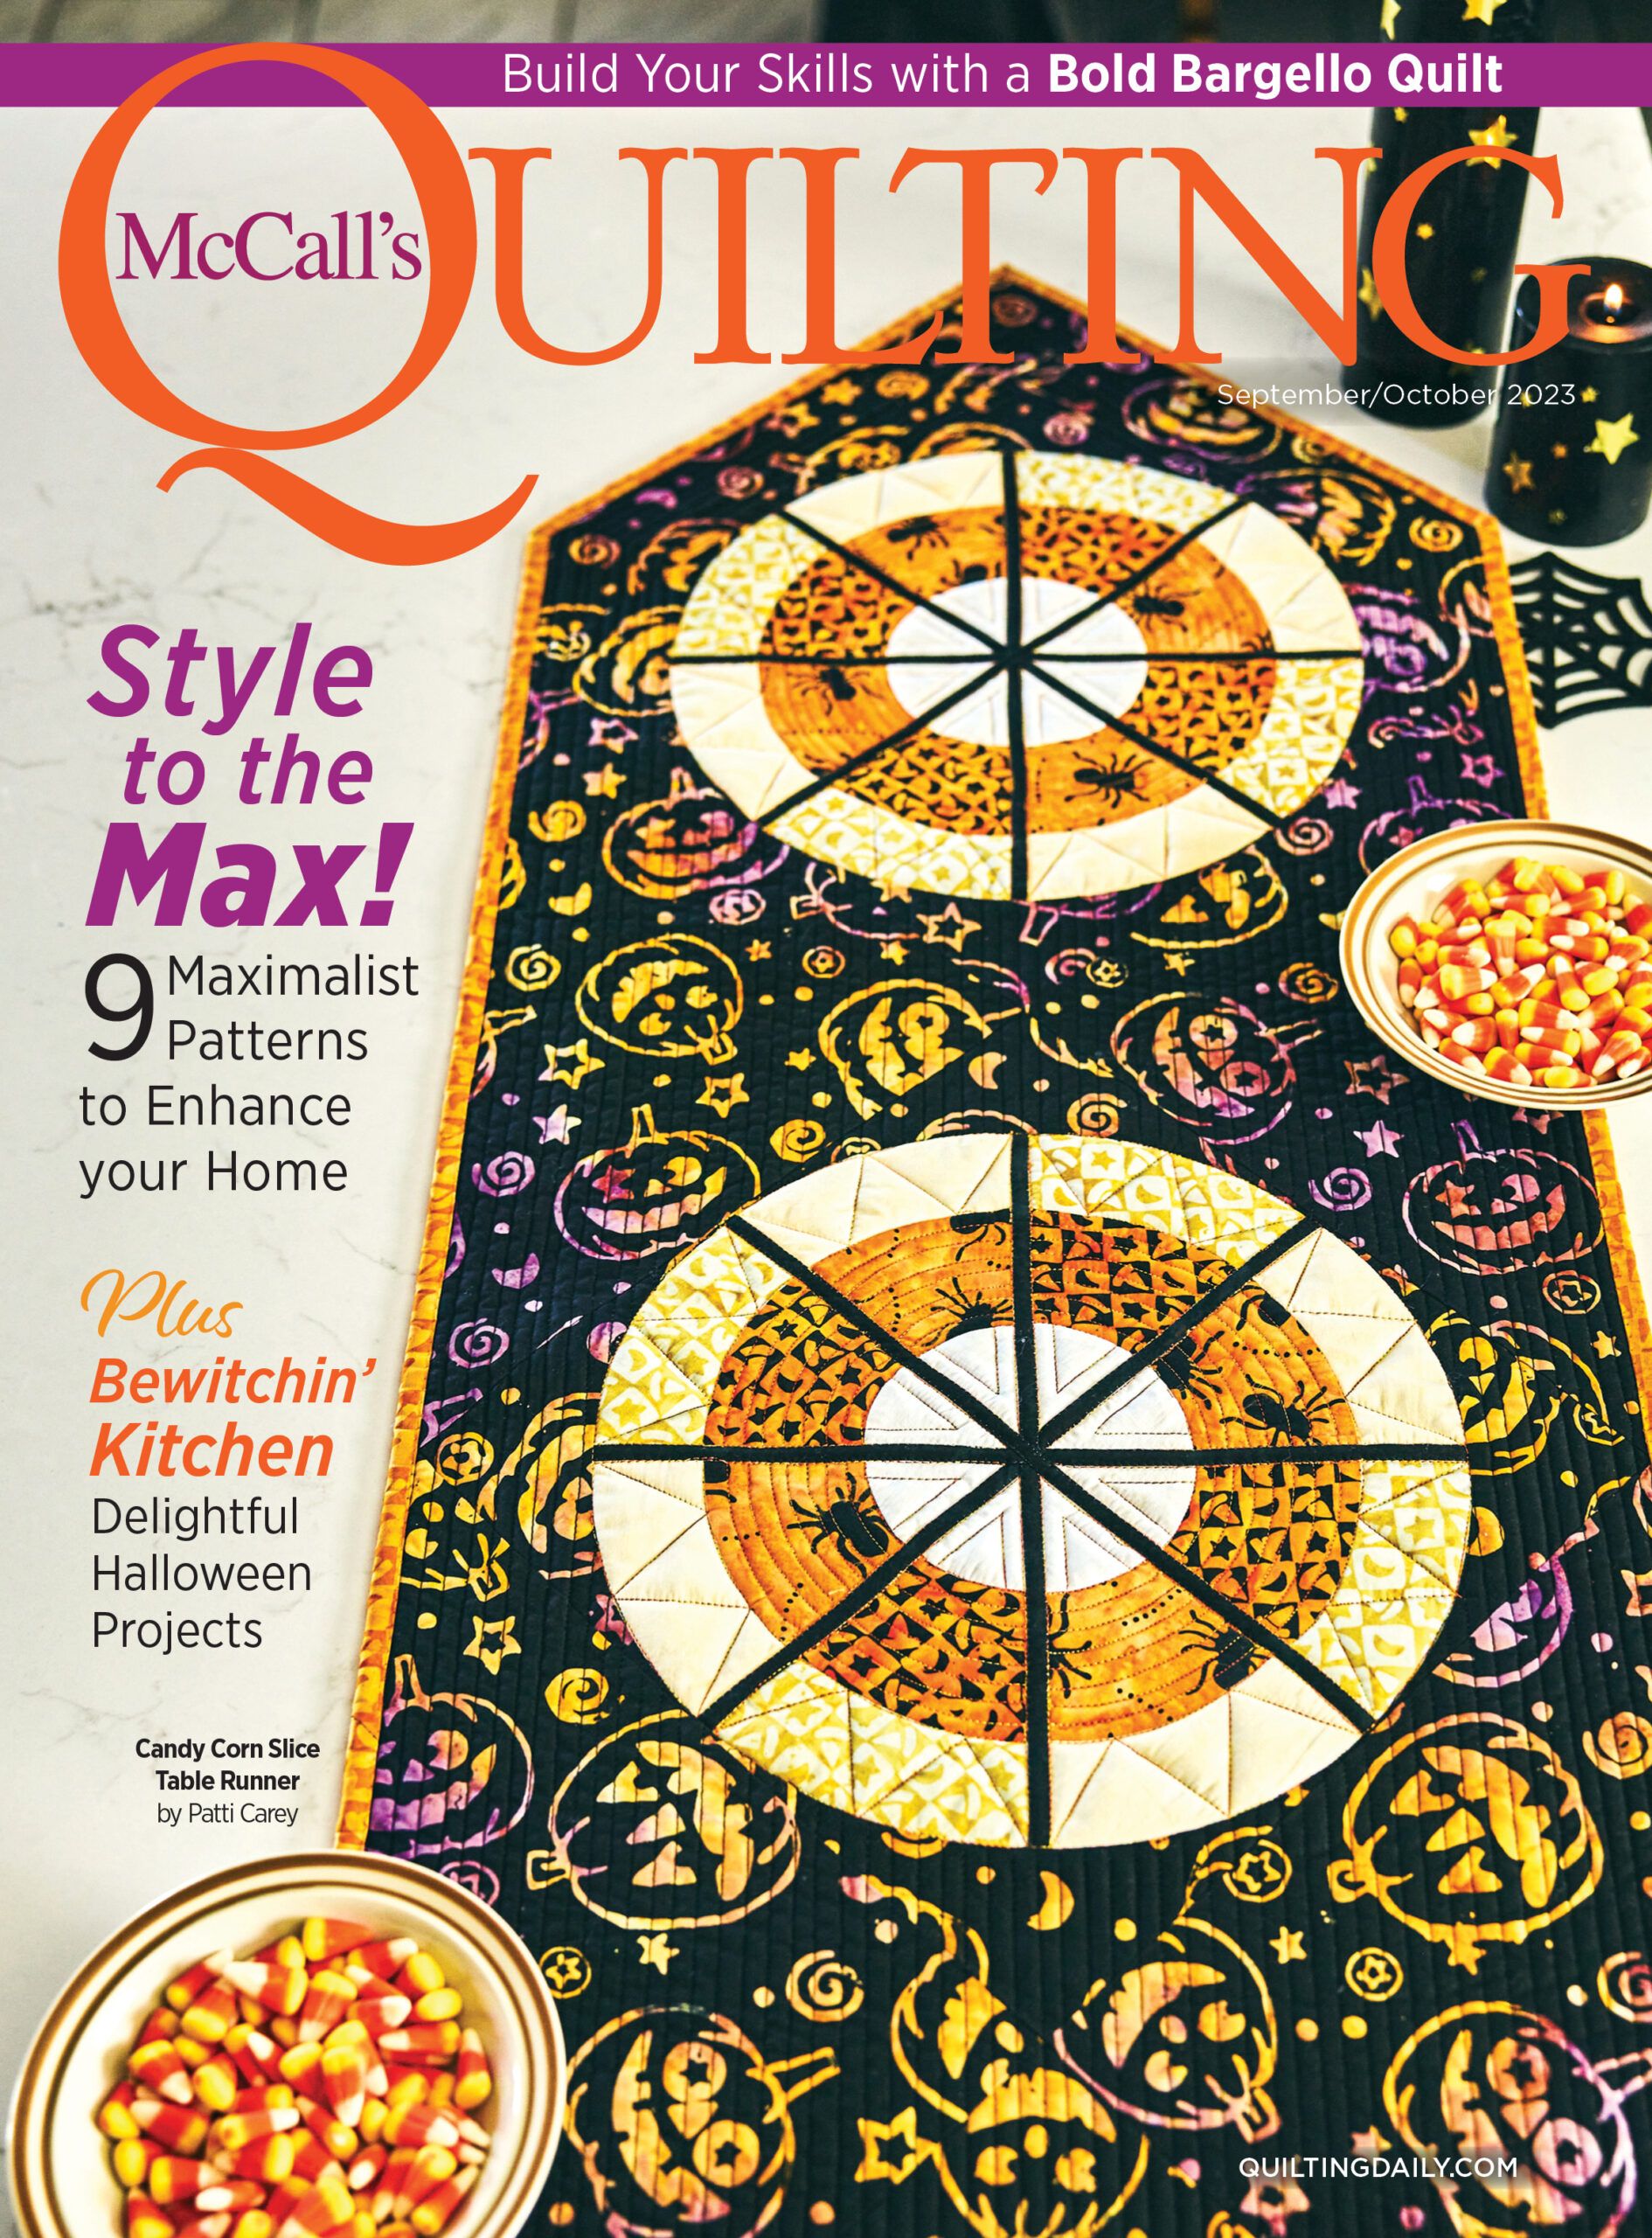 Quiltmaker September/October 2023 Digital Edition